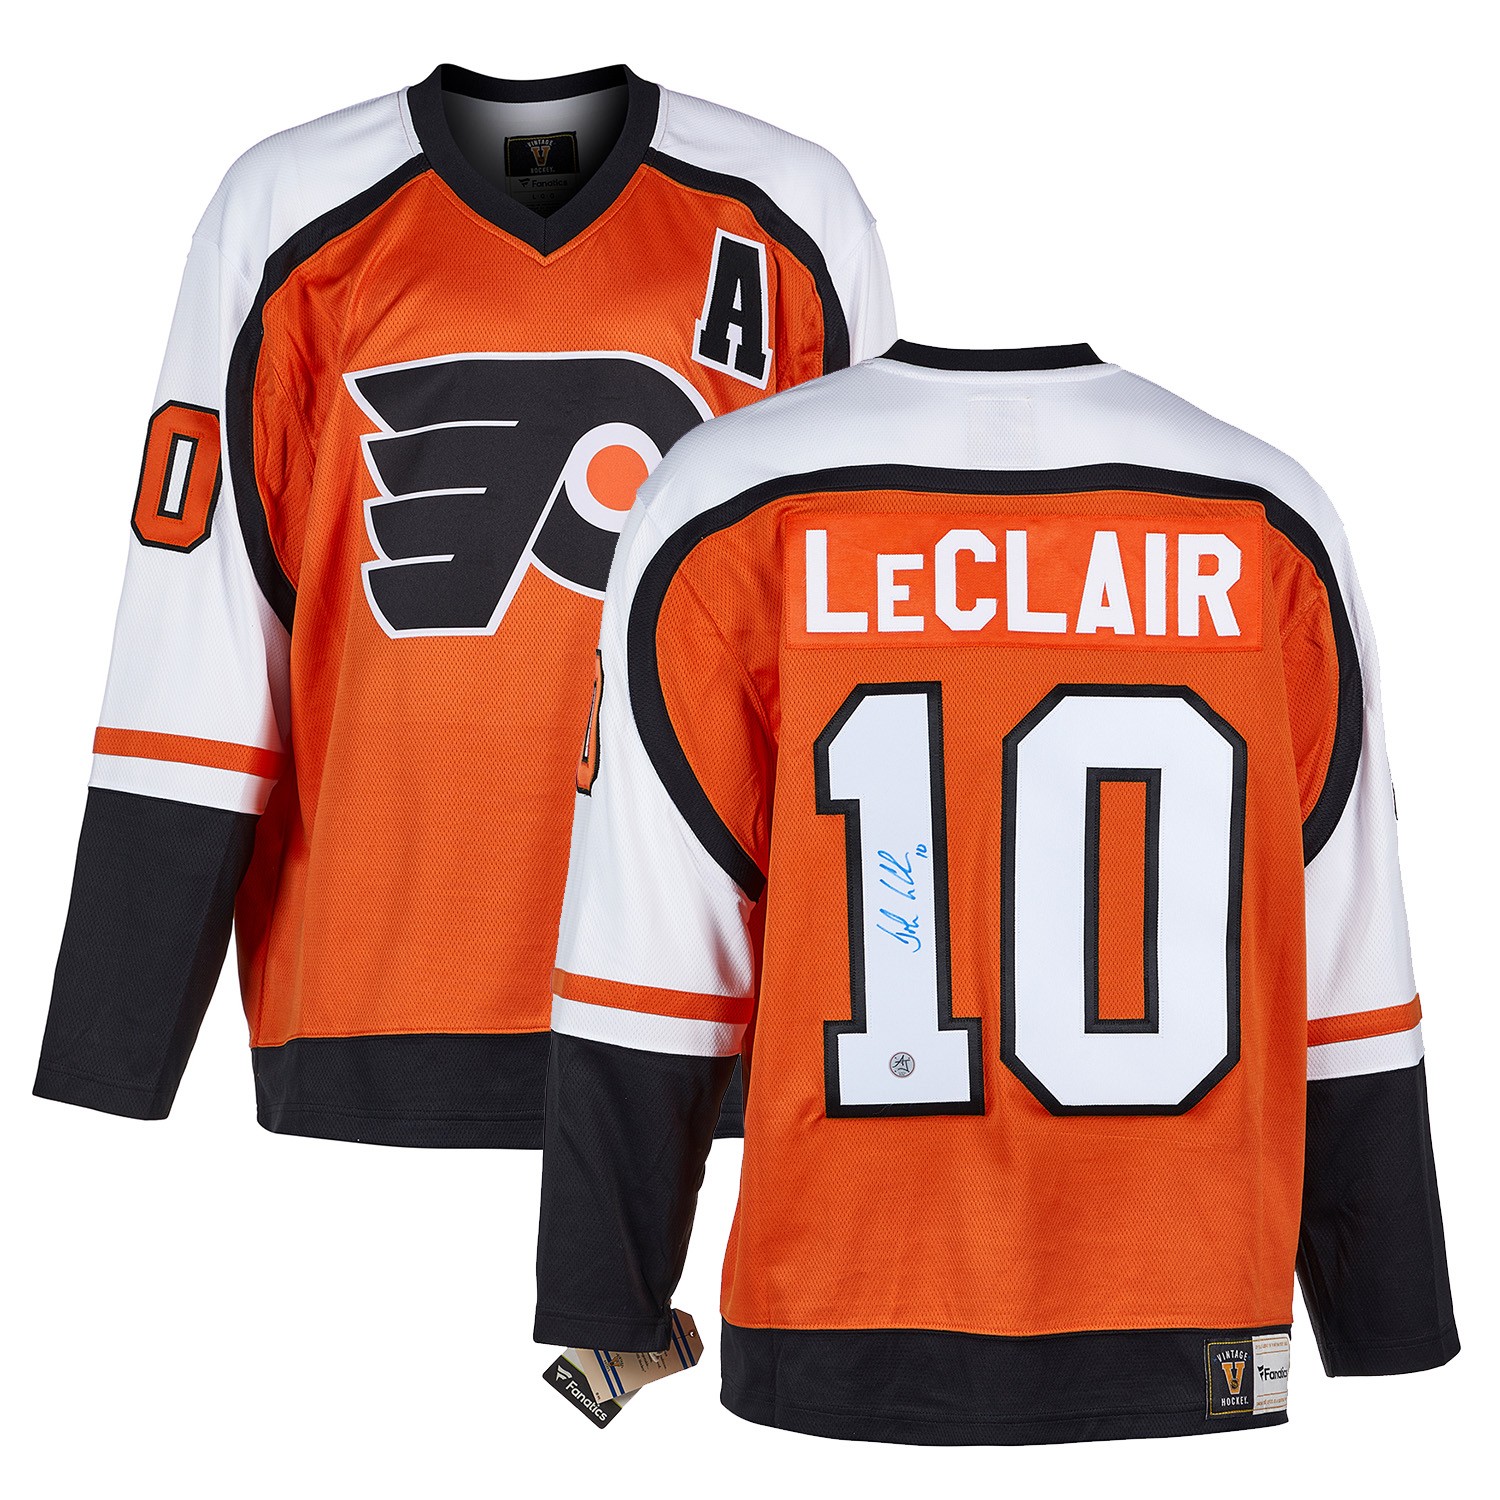 John LeClair Philadelphia Flyers Autographed Signed Retro Fanatics Jersey